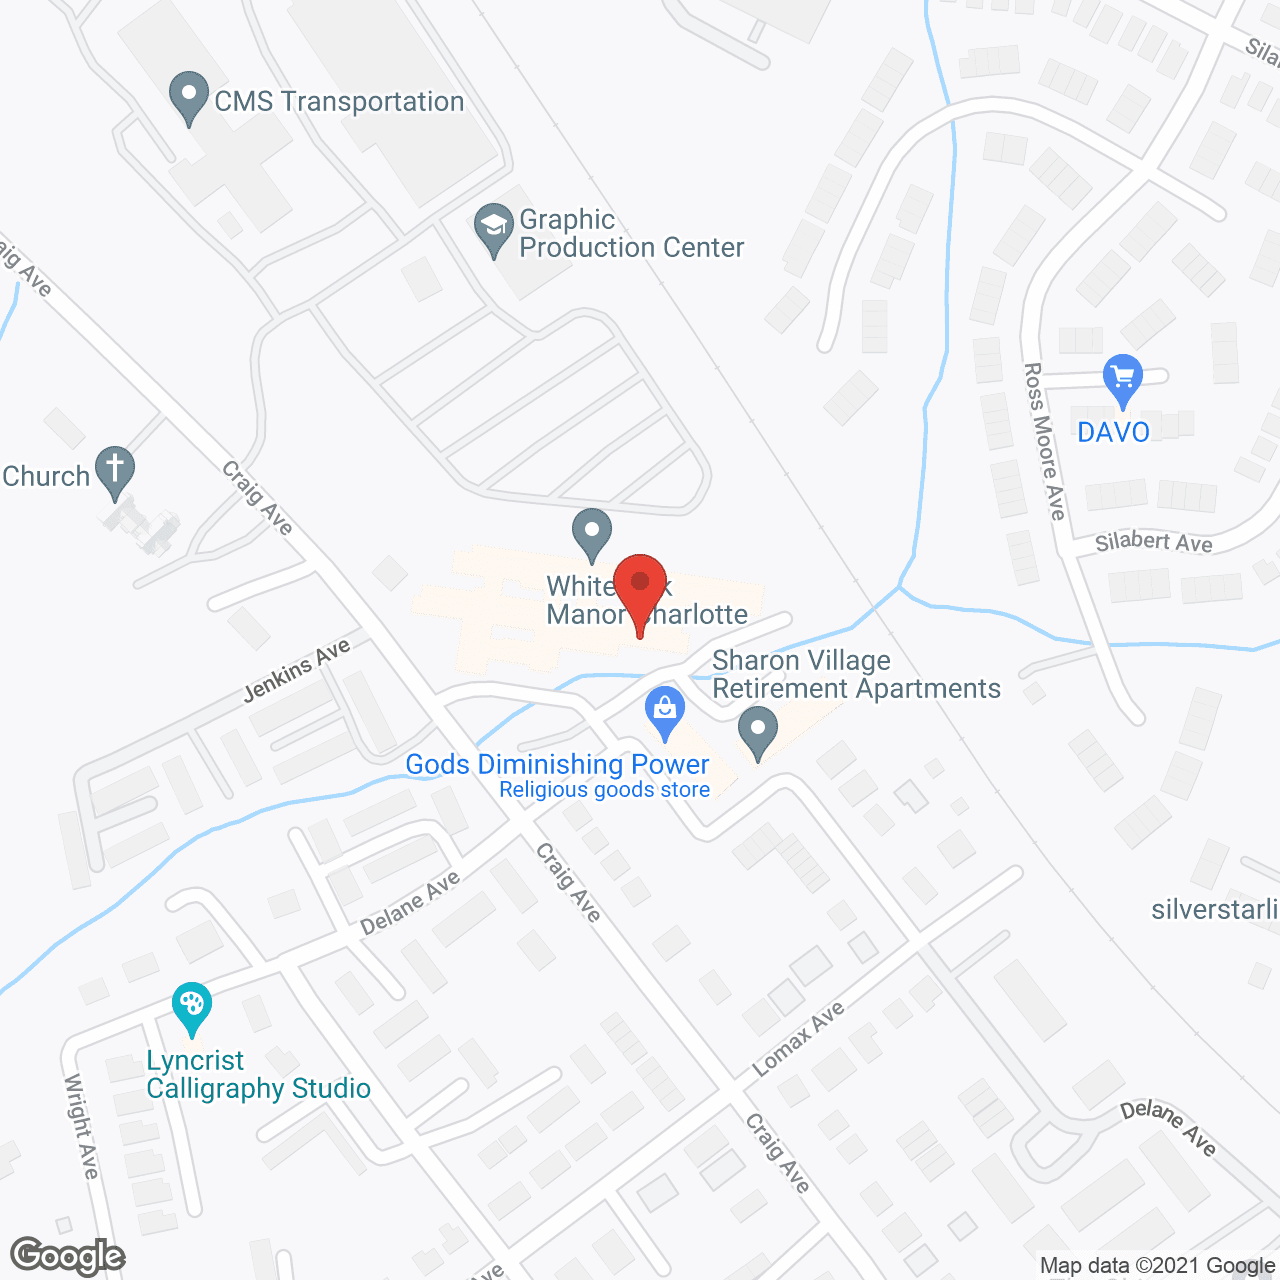 White Oak Manor-Charlotte in google map